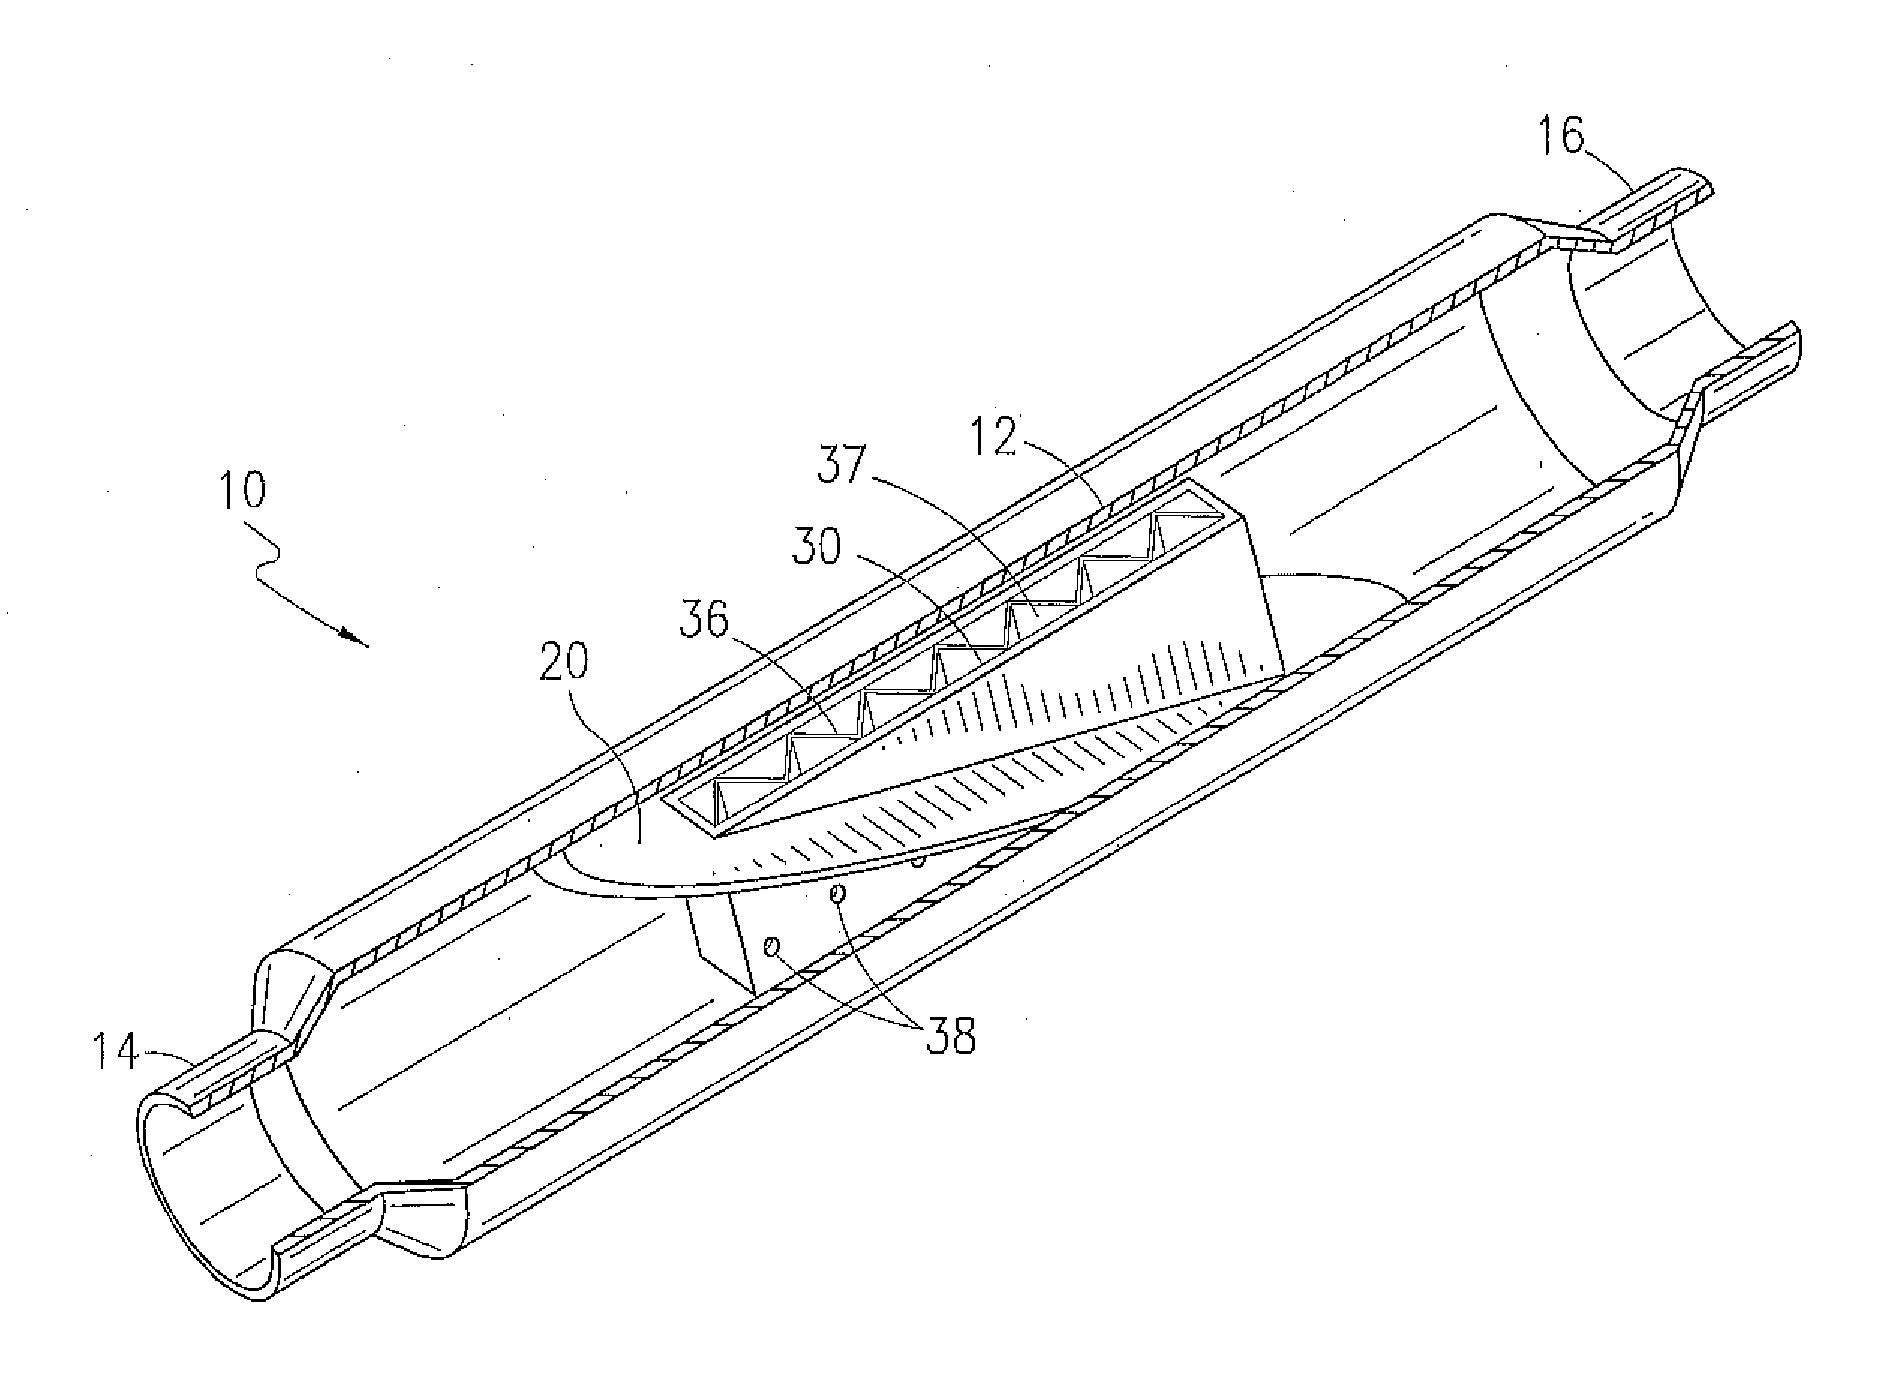 Marine muffler with angularly disposed internal baffle